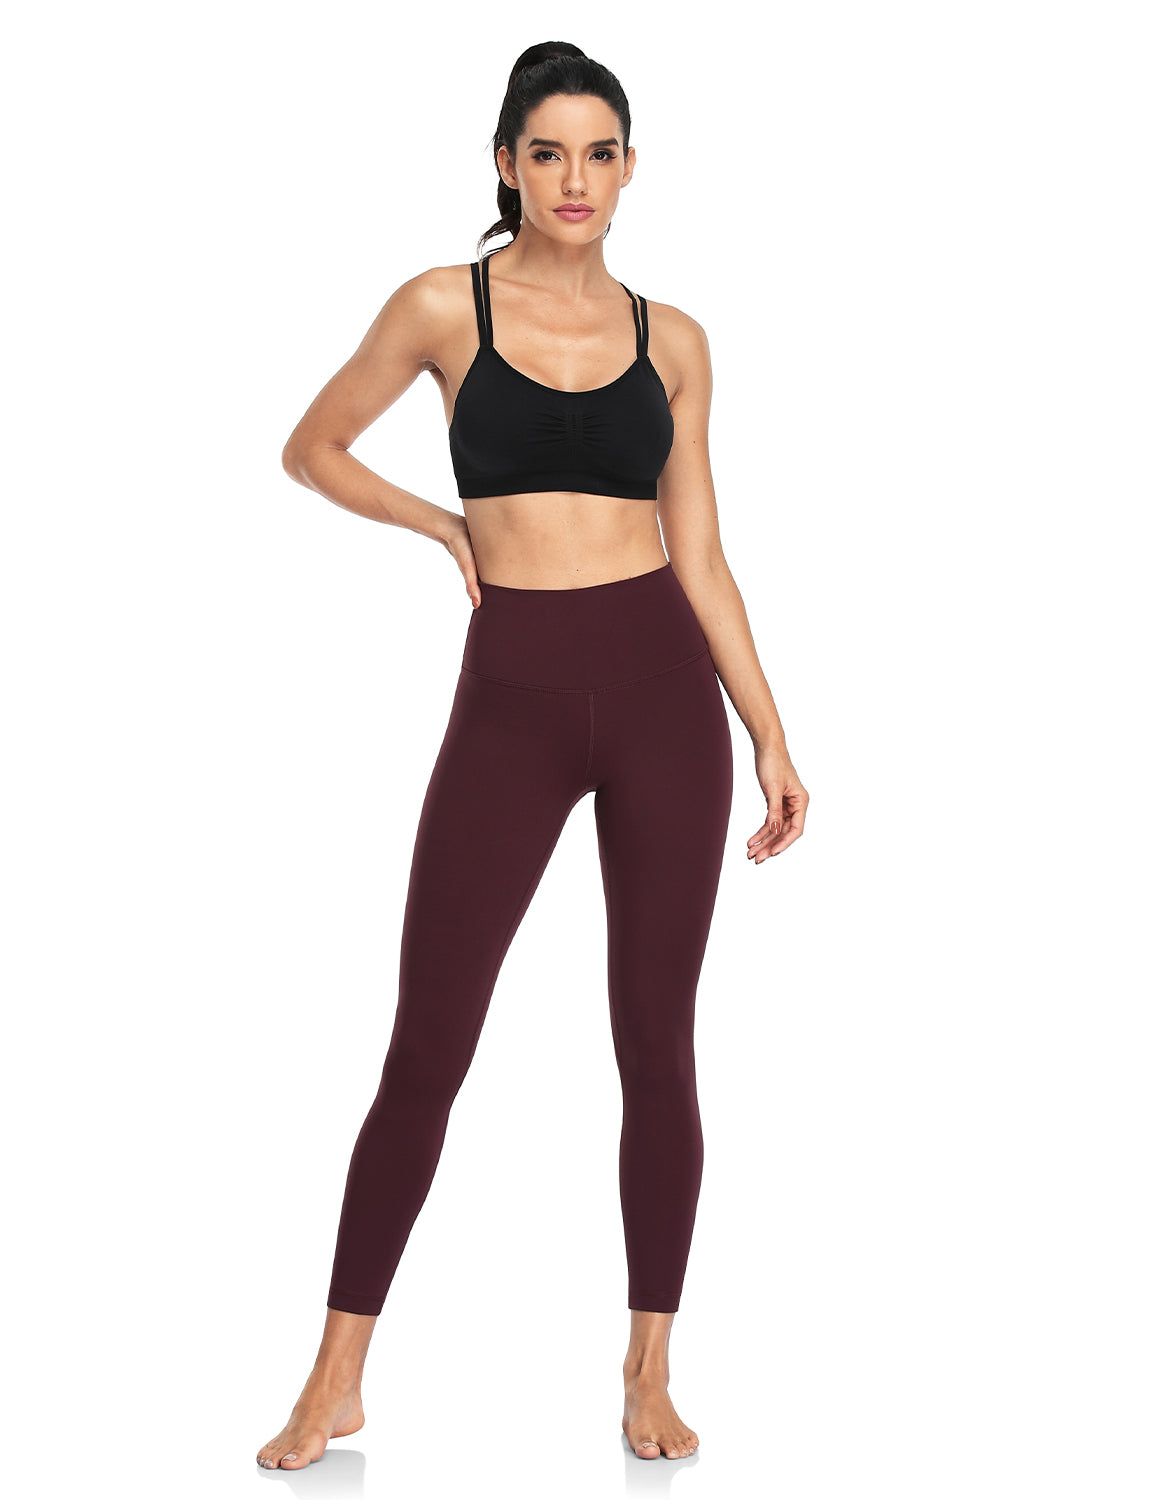 HeyNuts violet Verbena colors sports outfit set on .#leggings #b